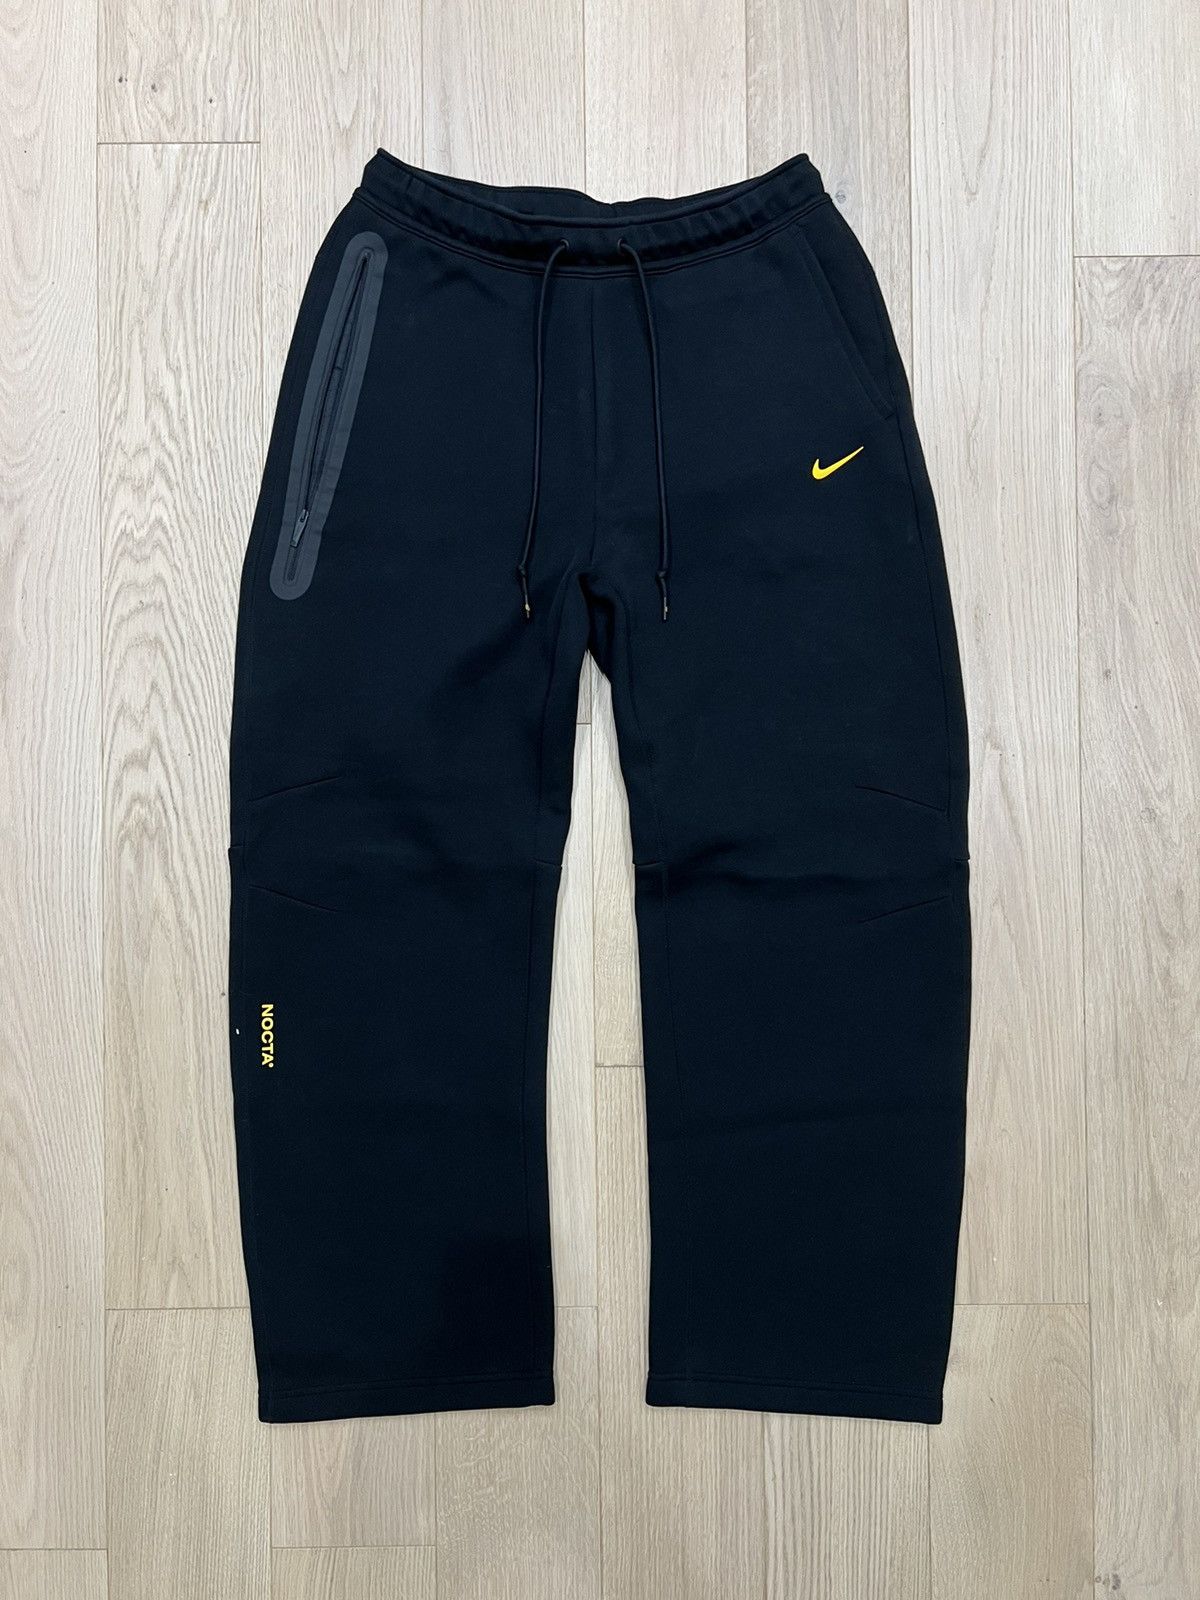 Nike x NOCTA Sysmau Fleece Pant Black